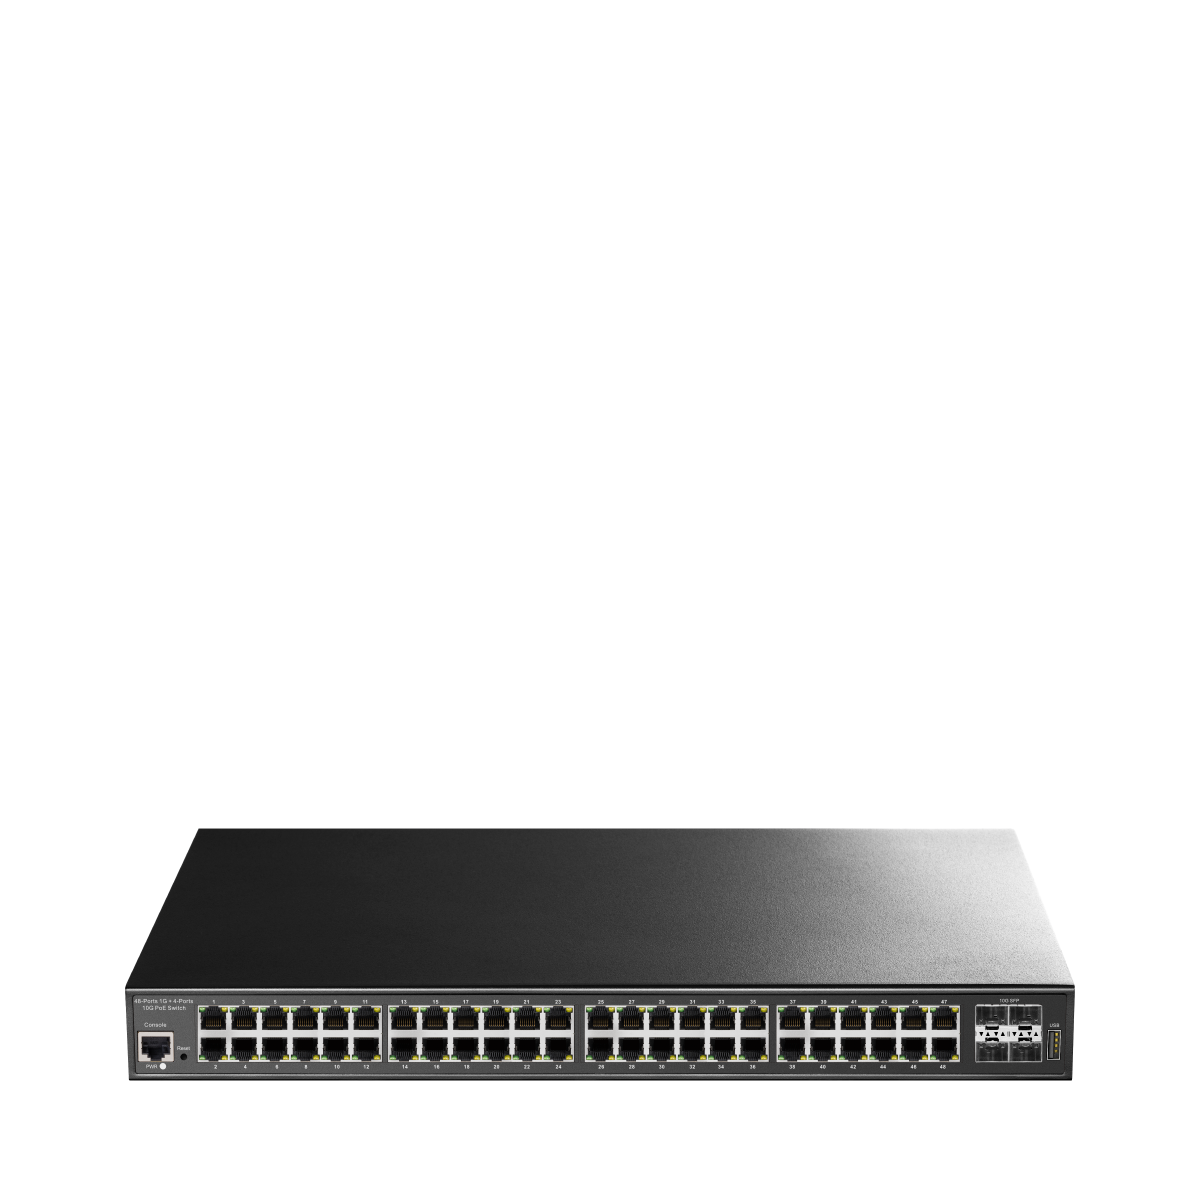 GS2048PS4-720W	48-Port Layer 2 Managed Gigabit PoE++ Switch with 4 10G SFP ports 720W